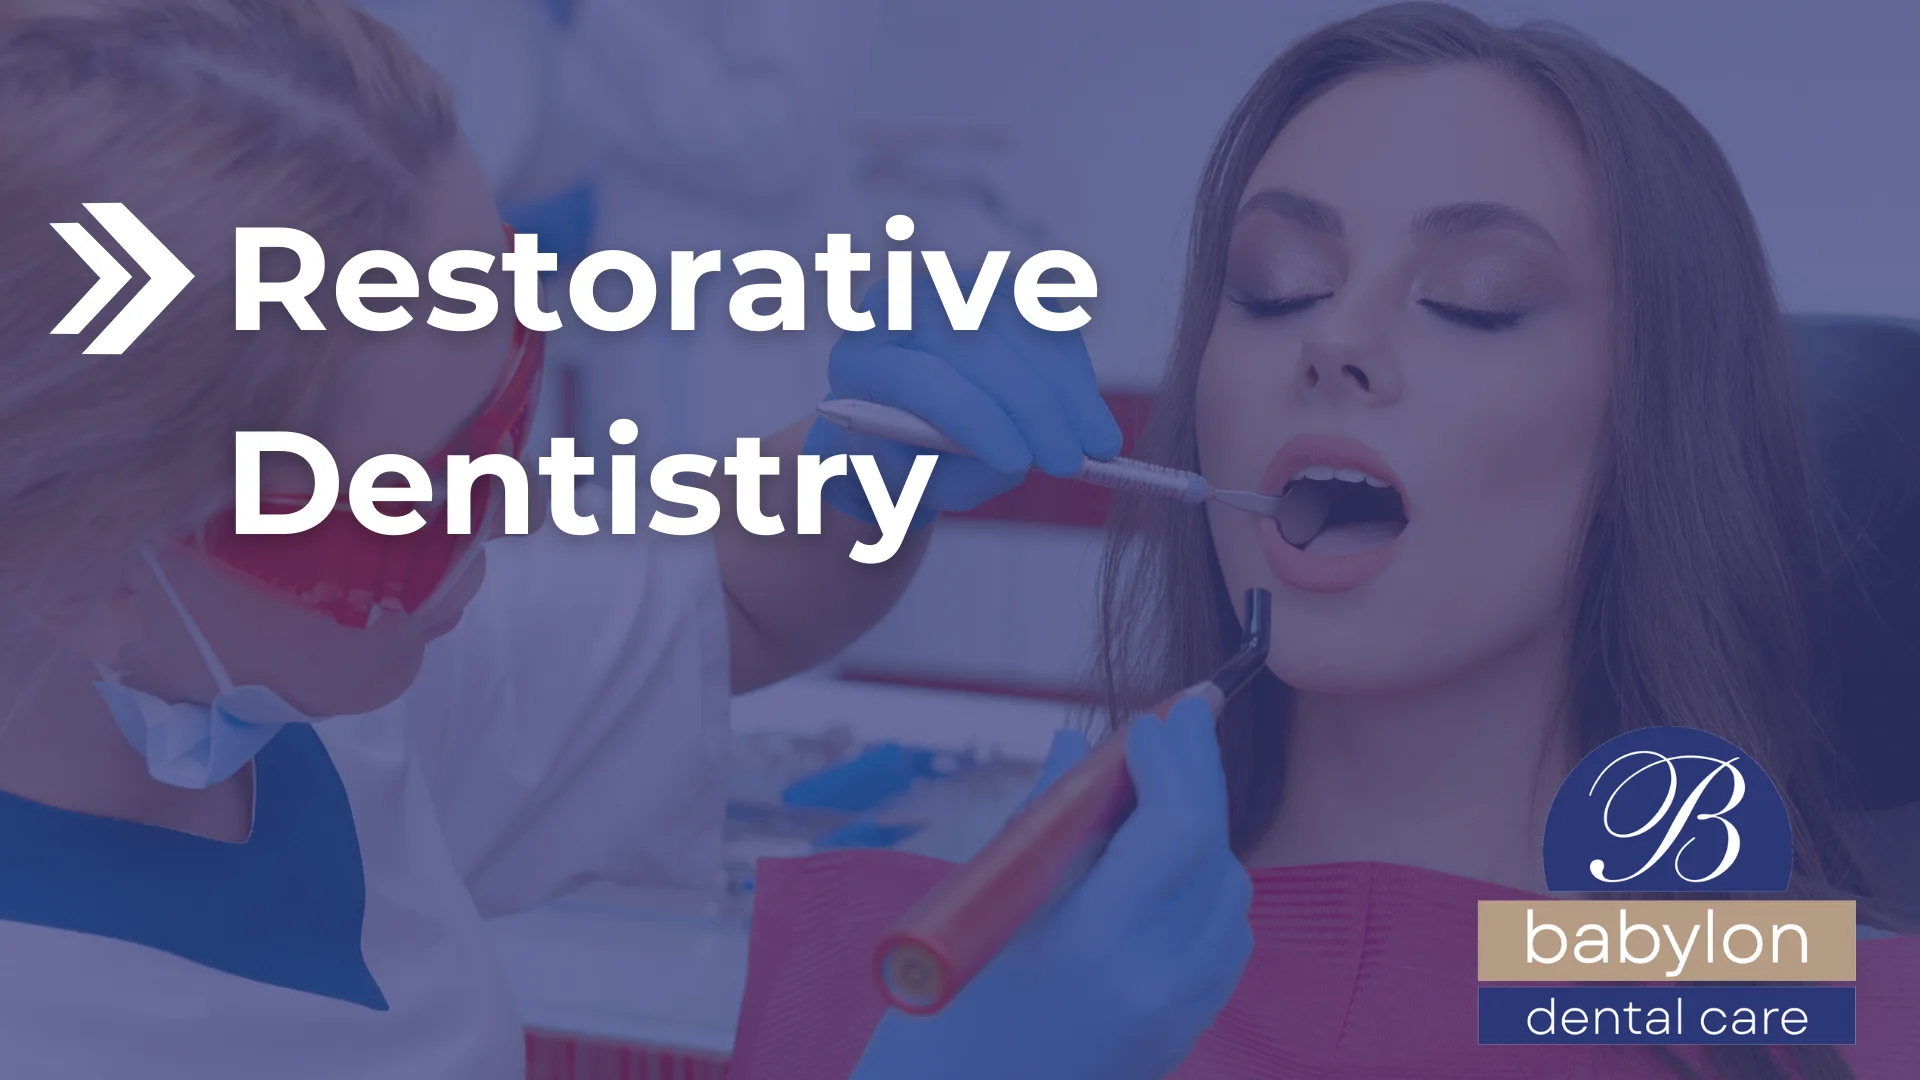 Restorative Dentistry Image - new logo